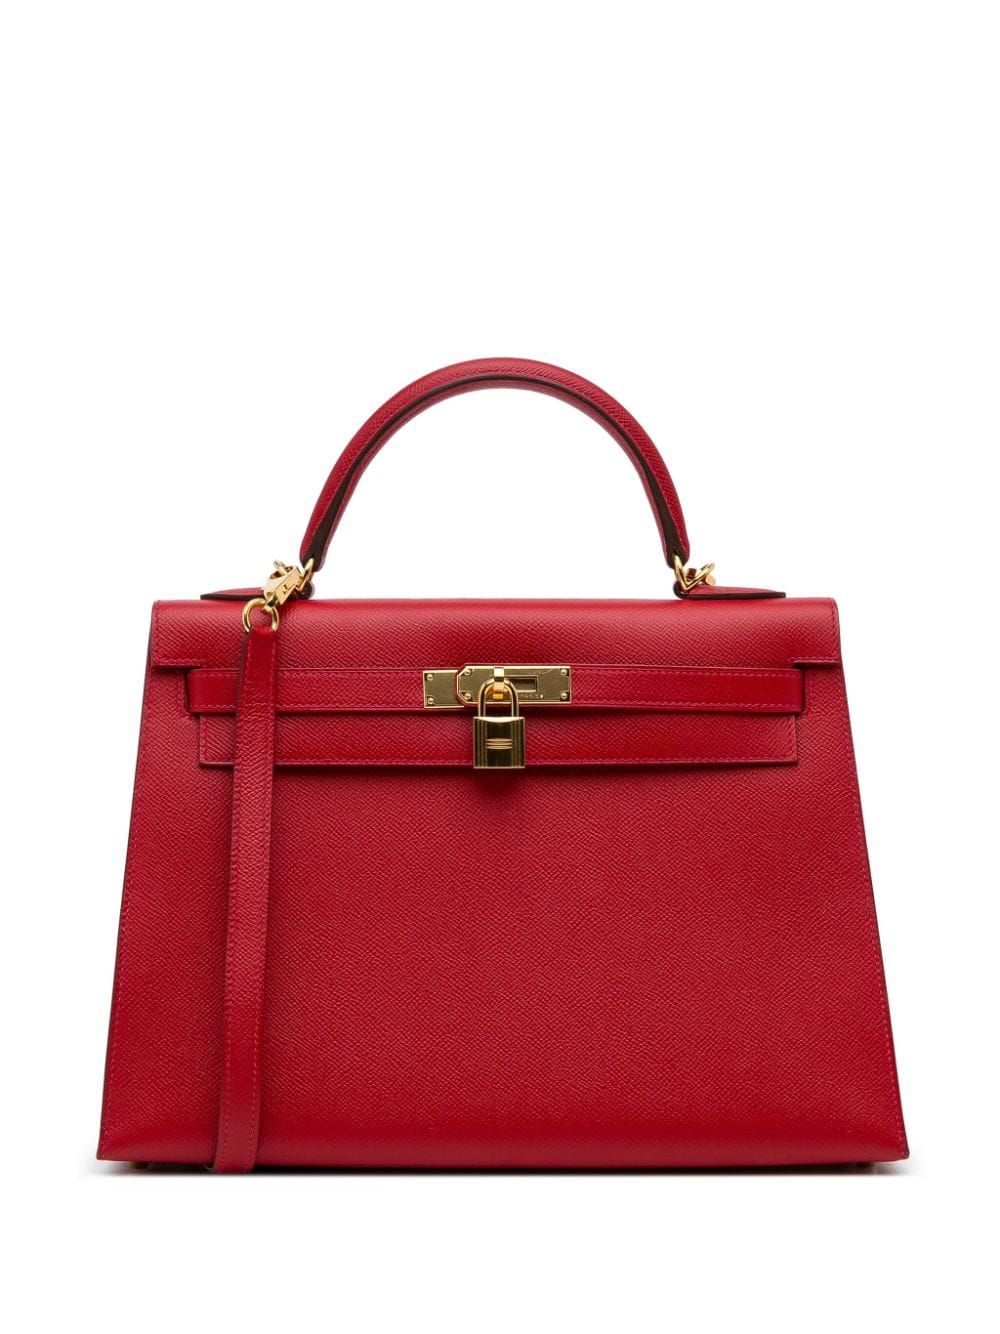 2015 pre-owned Kelly Selliere 32 handbag | Farfetch Global